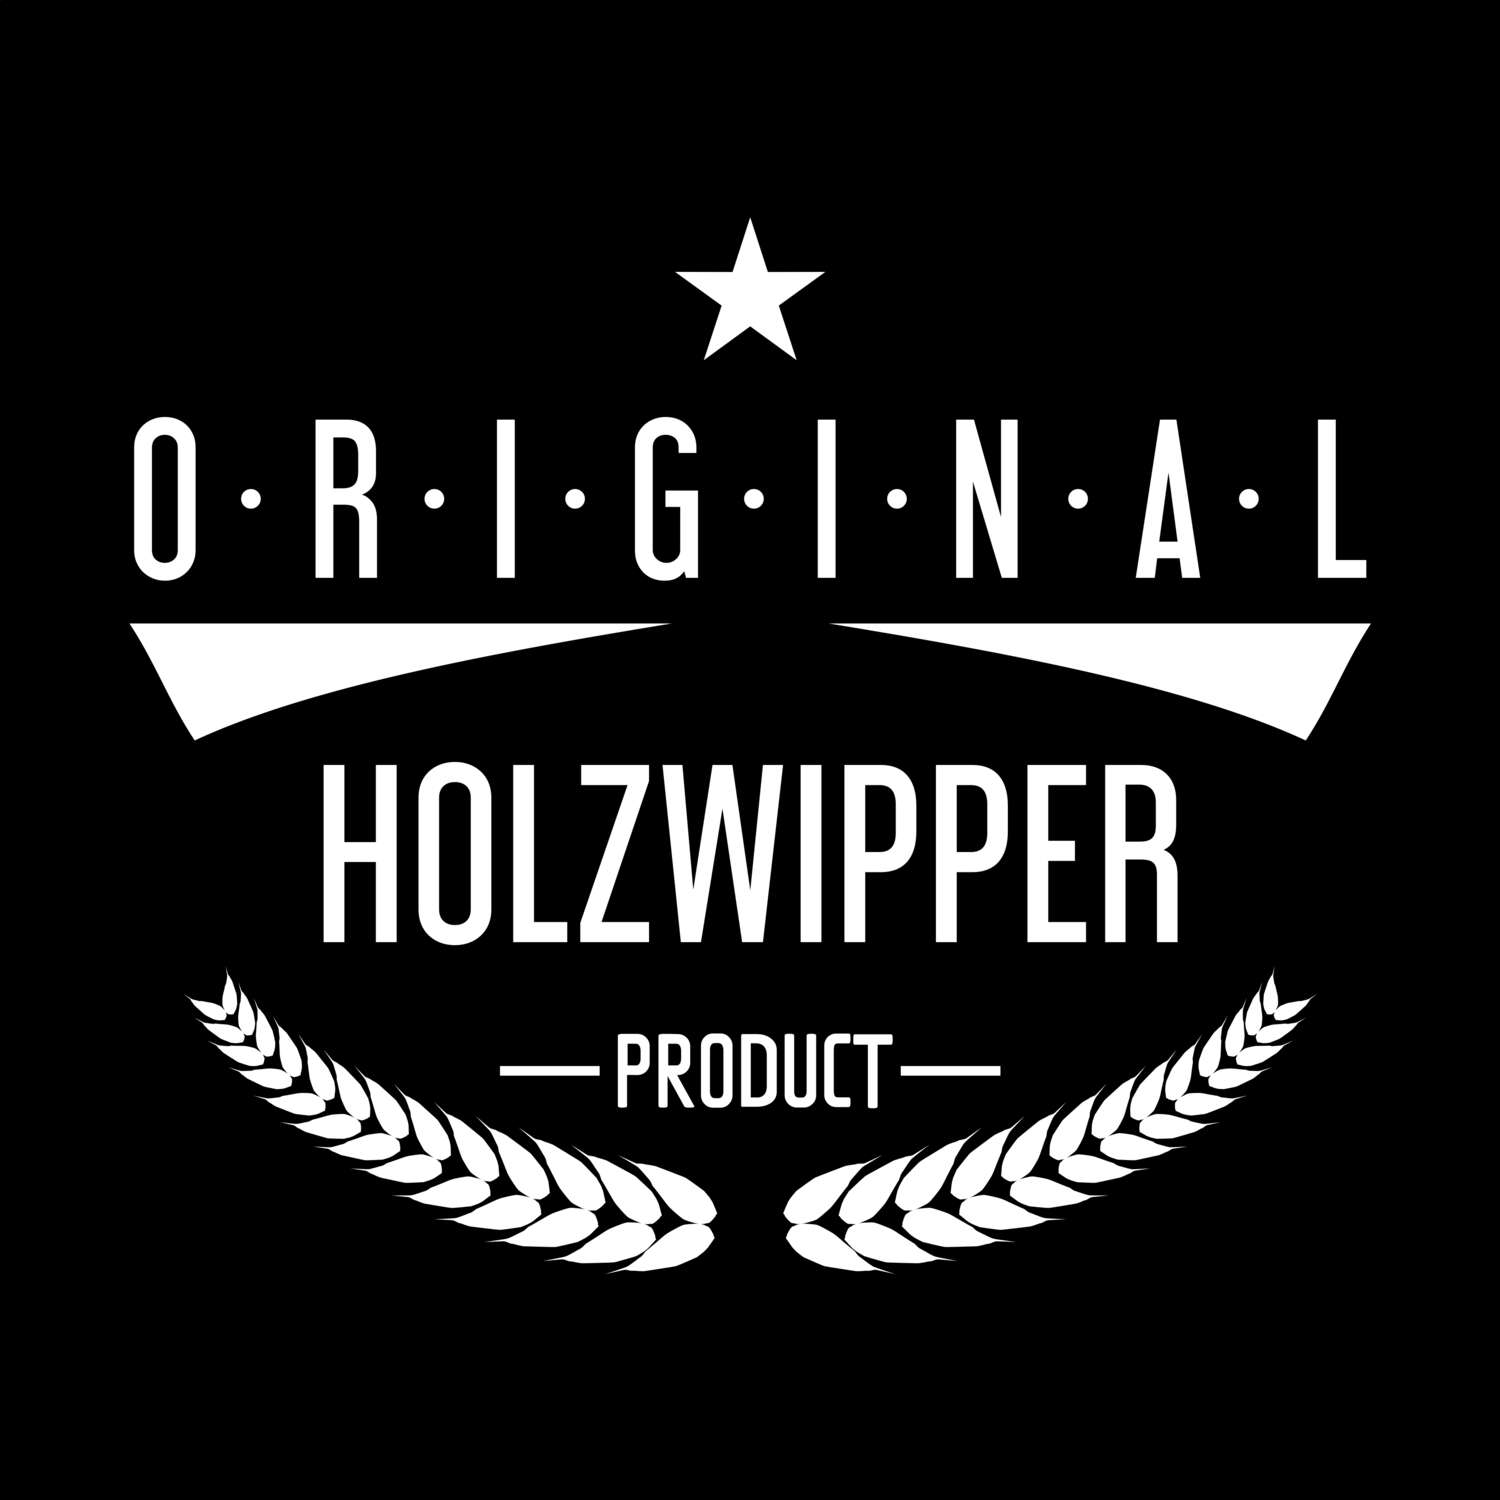 Holzwipper T-Shirt »Original Product«